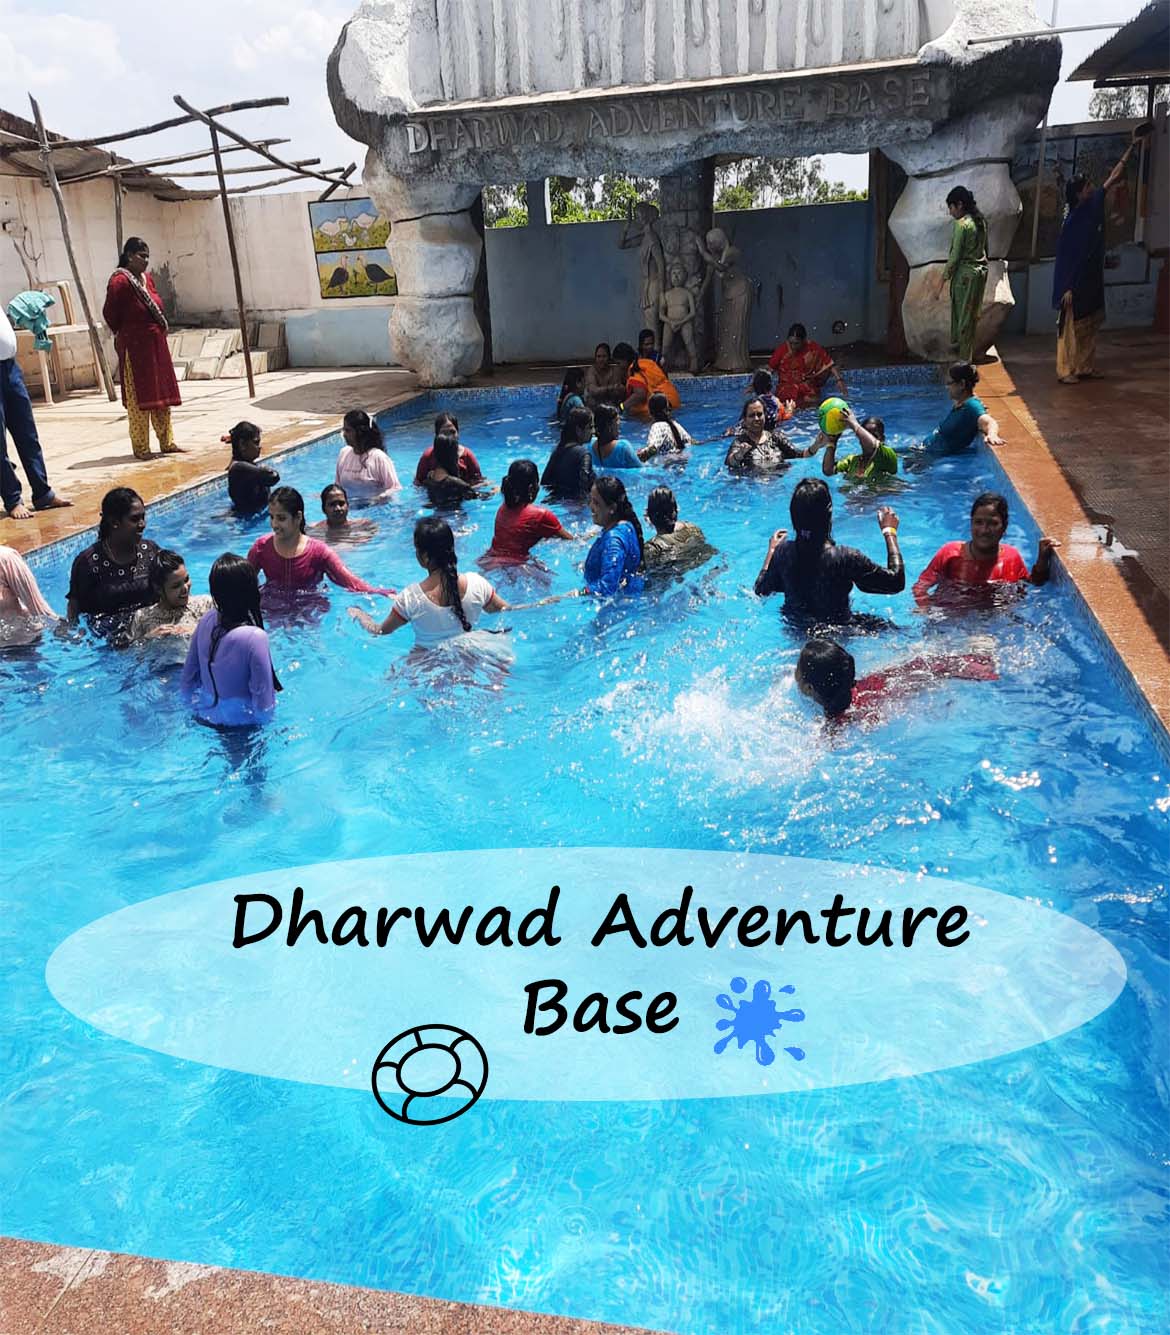 Dharwad Adventure Base Entry Fee